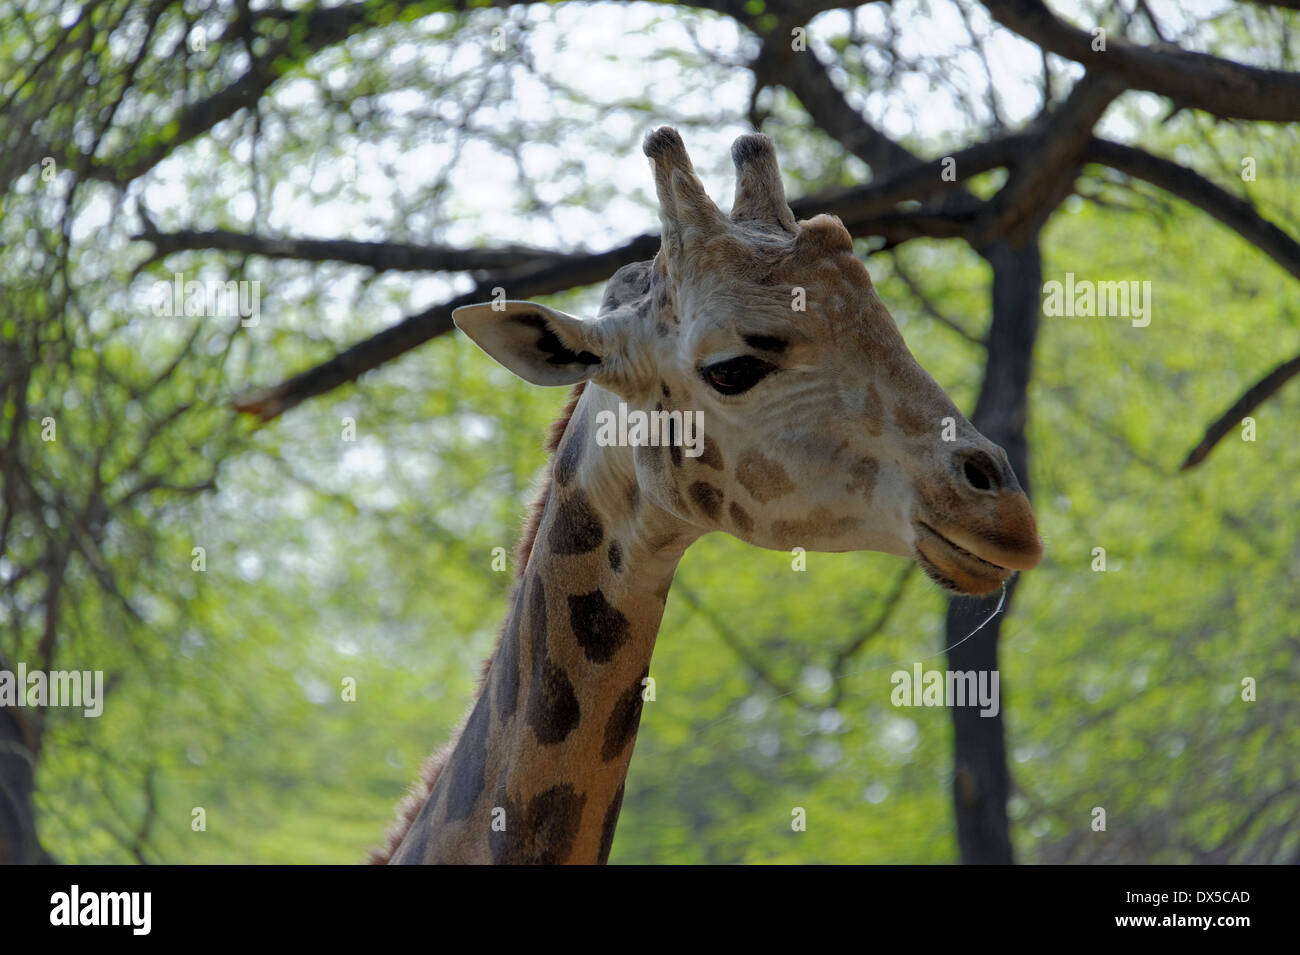 Giraffe (Giraffa camelopardalis) is an African even-toed ungulate mammal, the tallest living terrestrial animal. Stock Photo